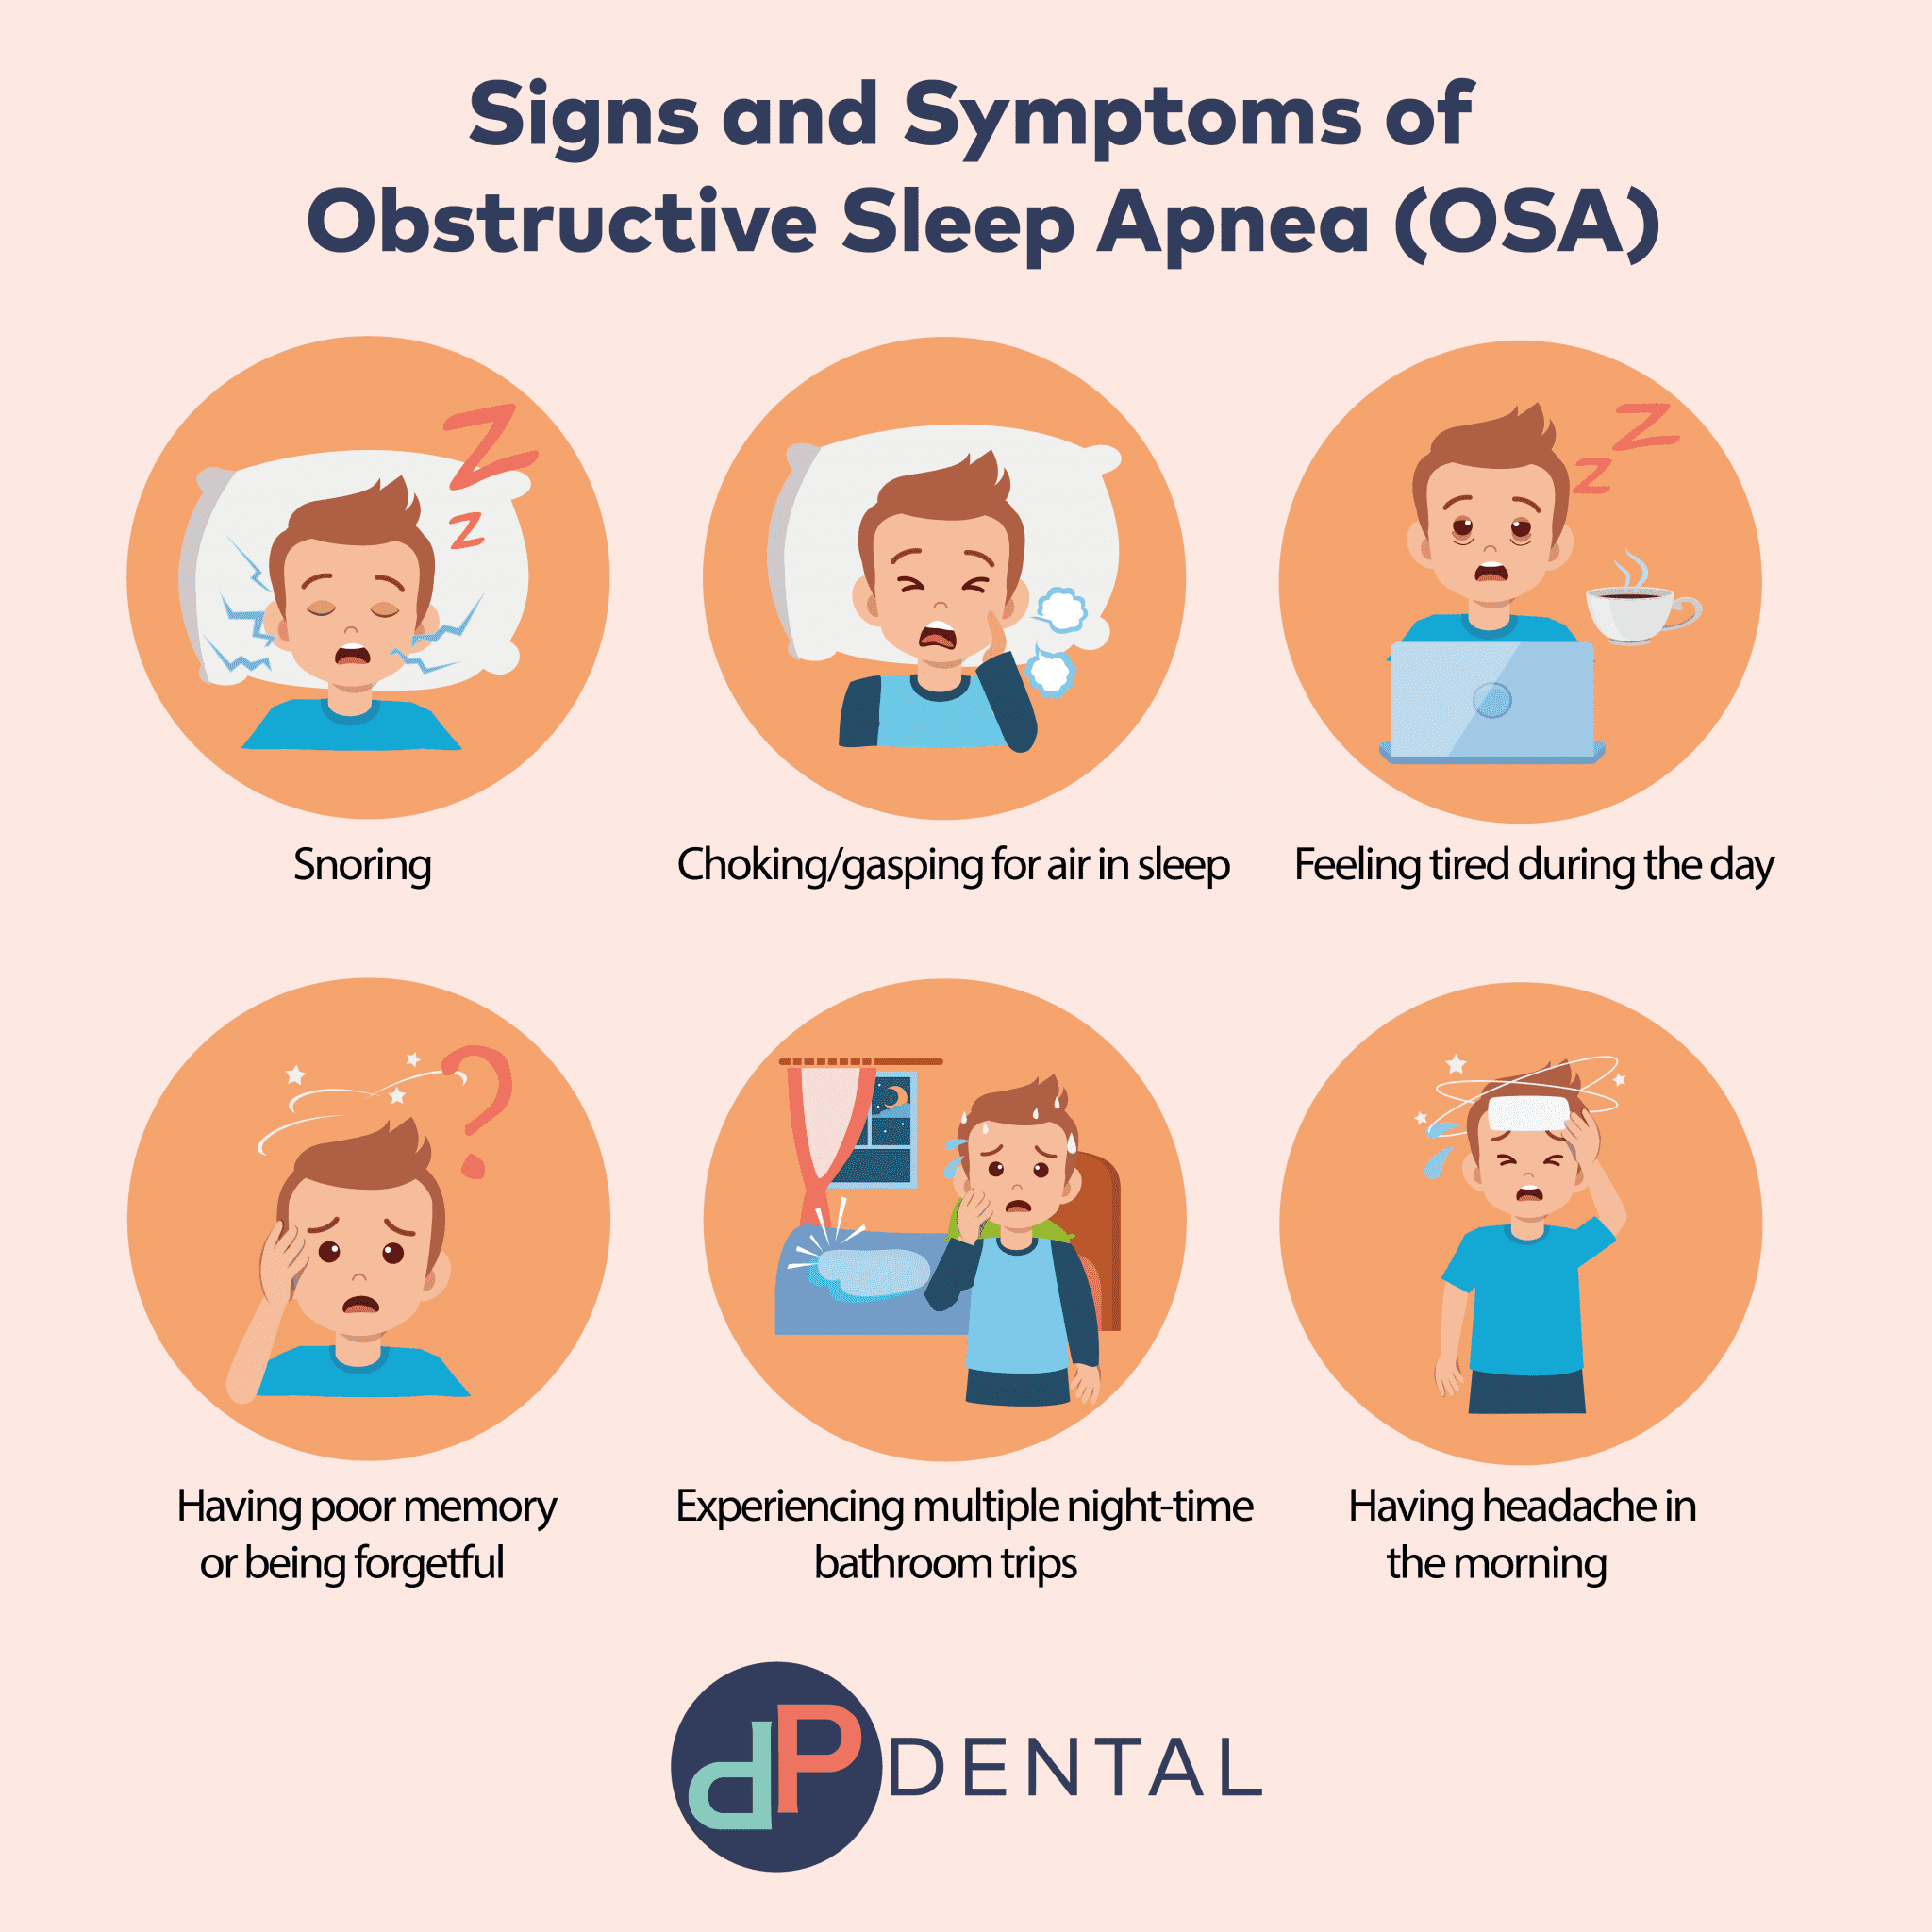 Copy Of Signs And Symptoms Of Obstructive Sleep Apnea Osa V3 01 Dp Dental 0905